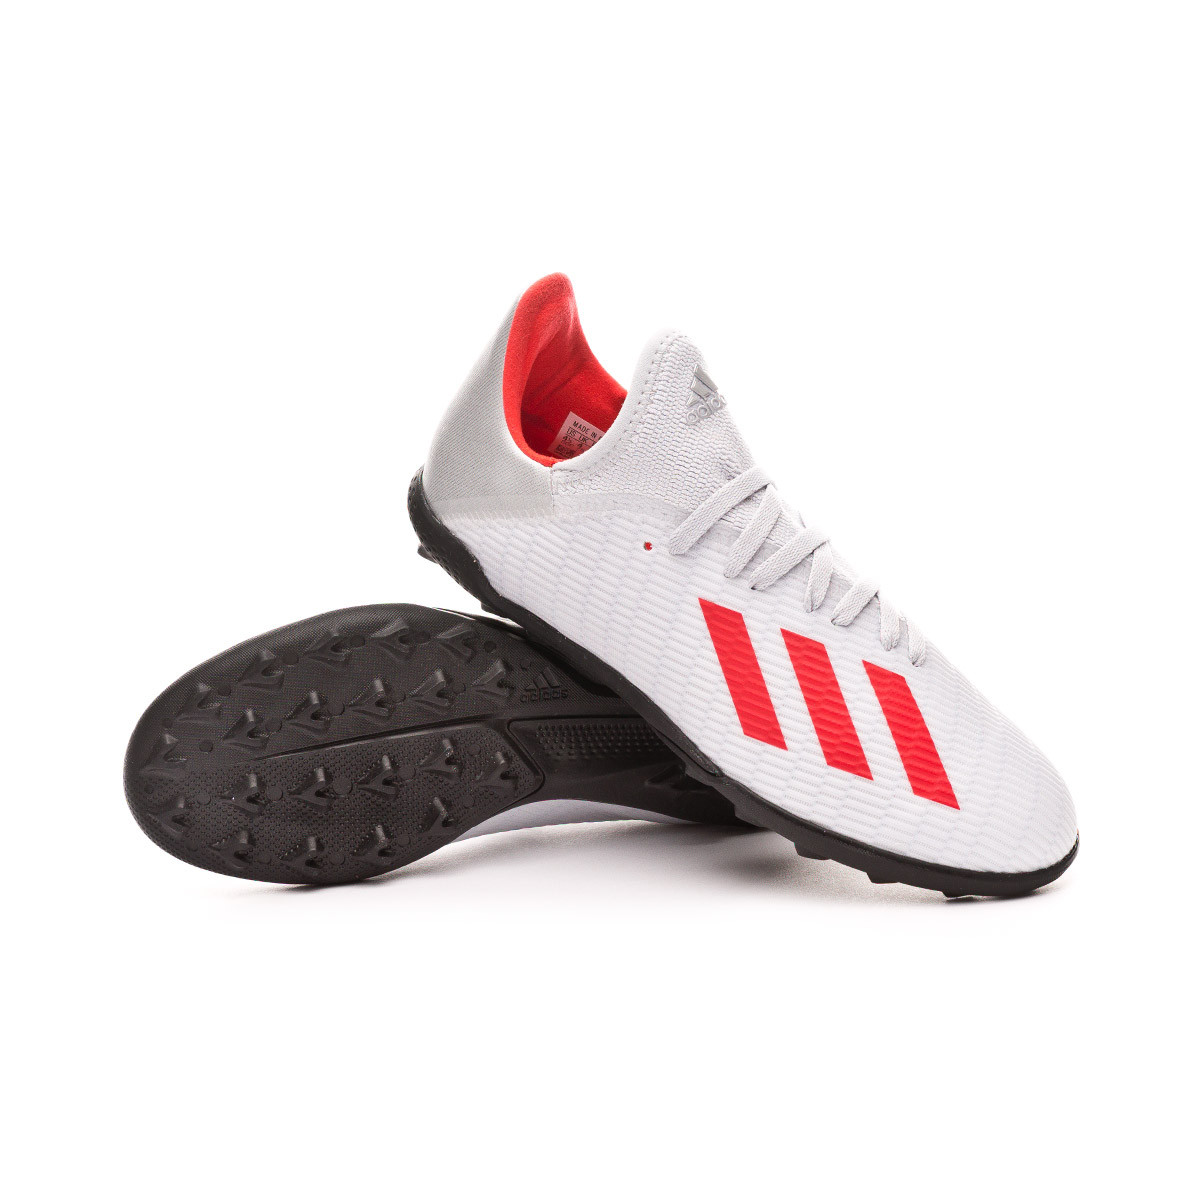 Football Boots adidas X 19.3 Turf Niño Silver metallic-Hi red-White -  Football store Fútbol Emotion